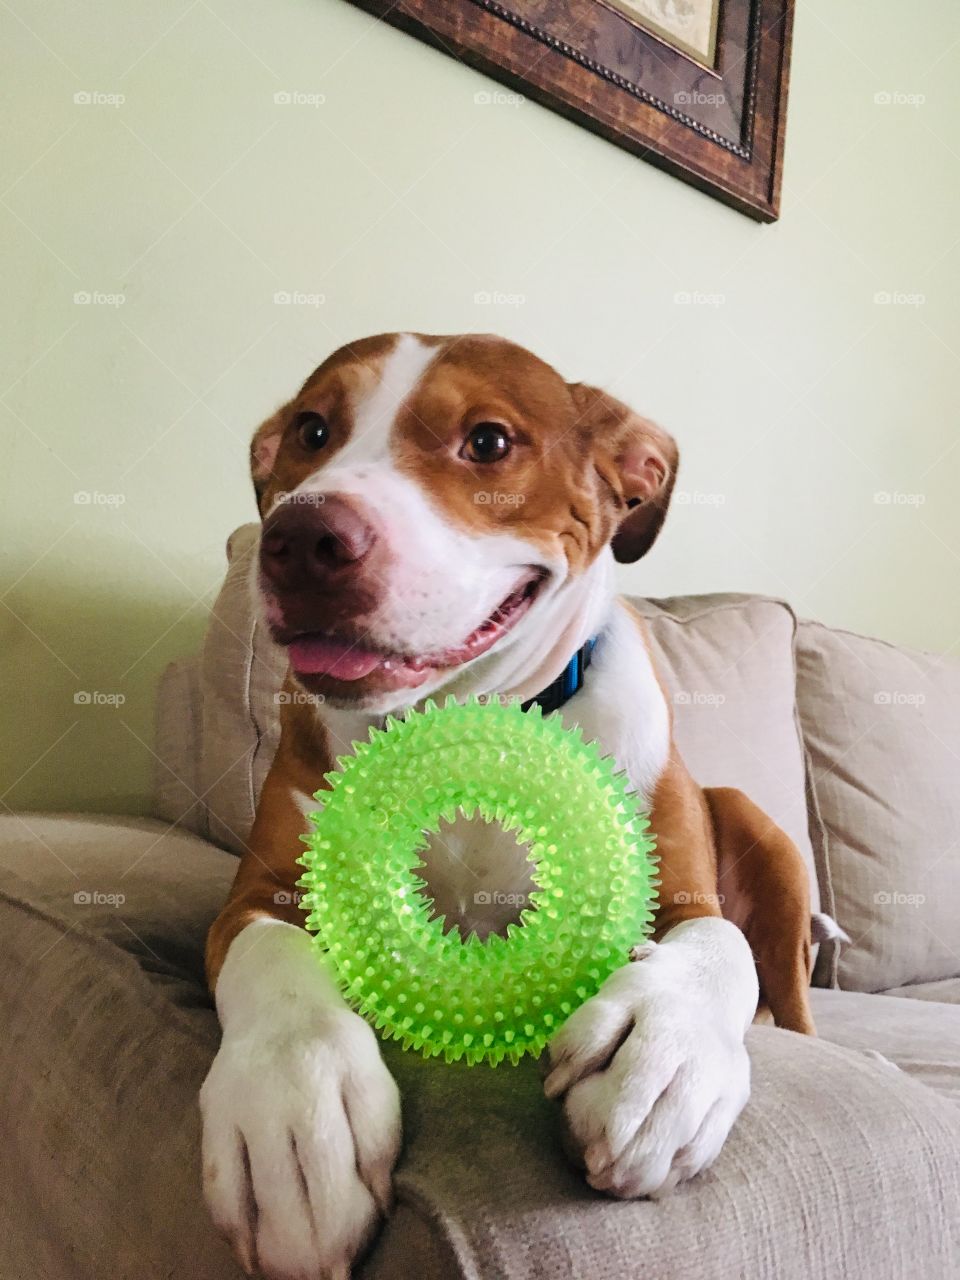 Beautiful pitbull dog holding a green toy